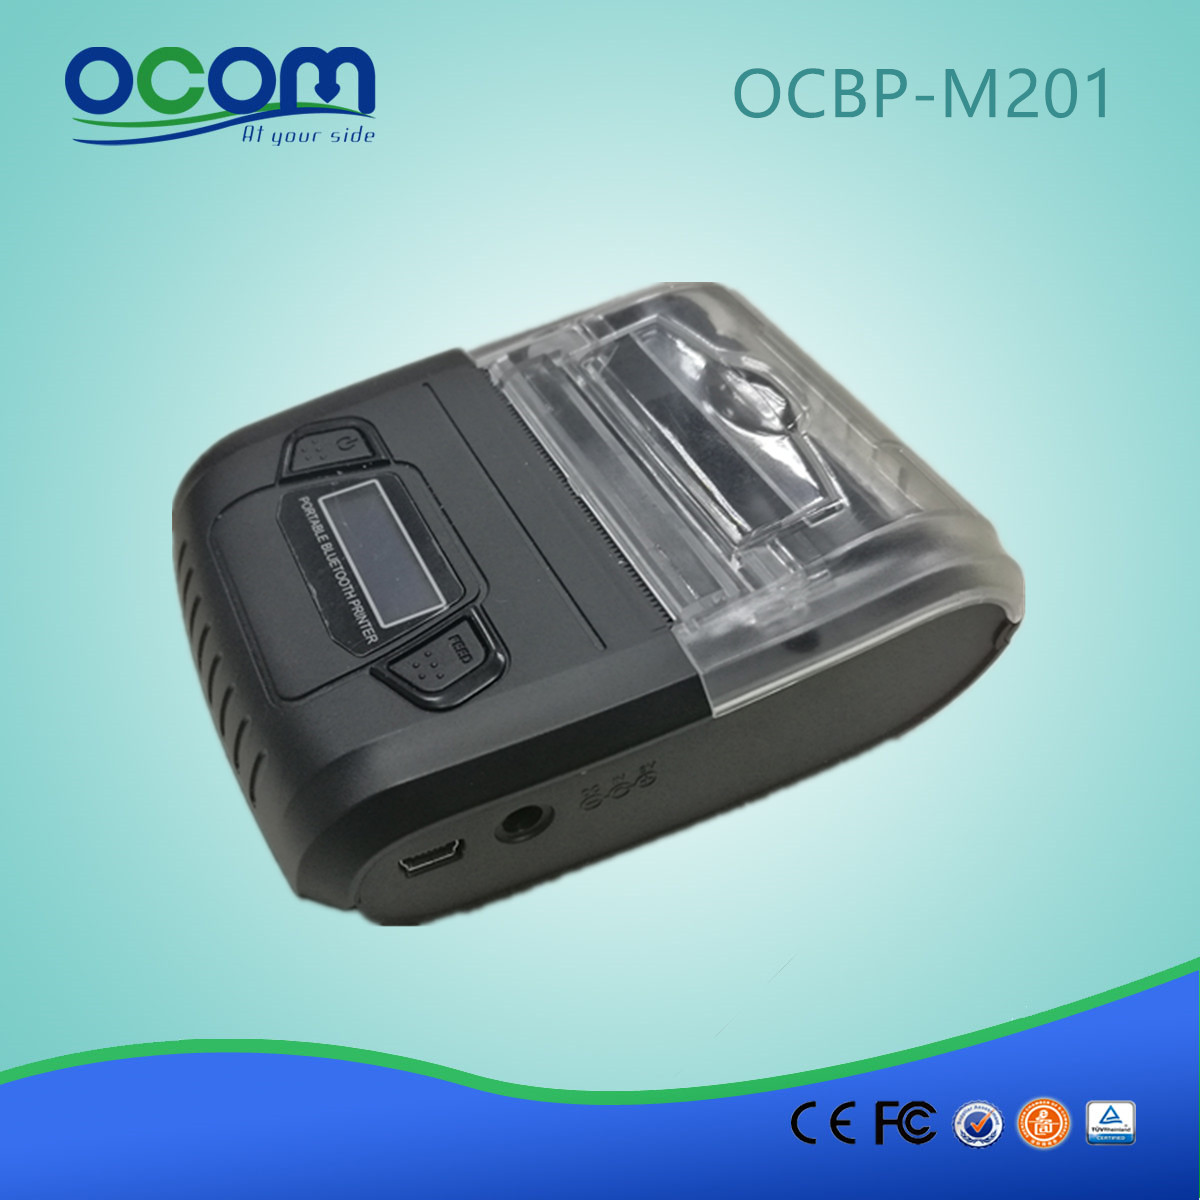 OCPP-M201 Portable Bluetooth barcode label print label printer